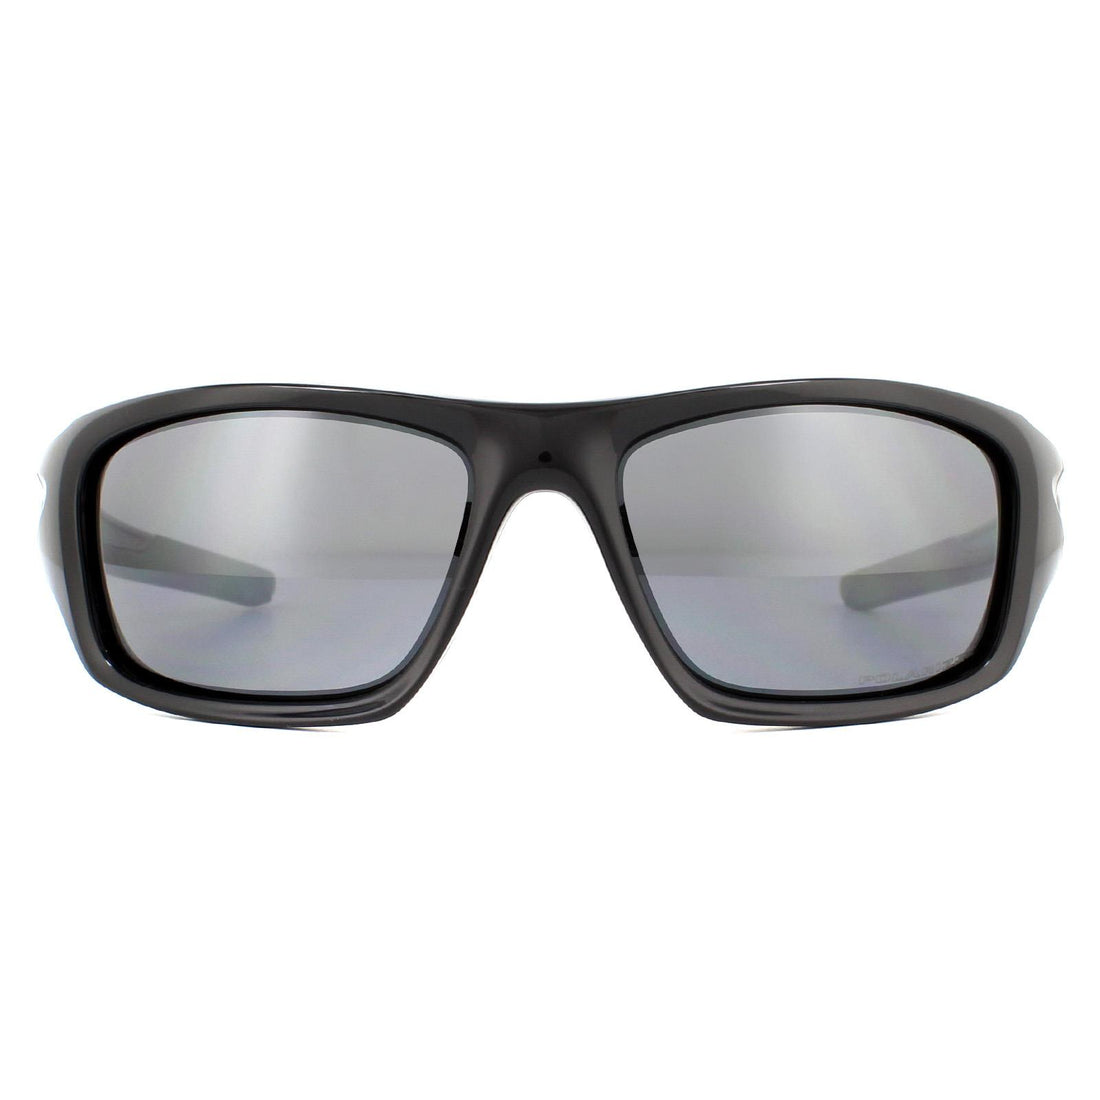 Oakley Valve oo9236 Sunglasses Polished Black / Black Iridium Polarized